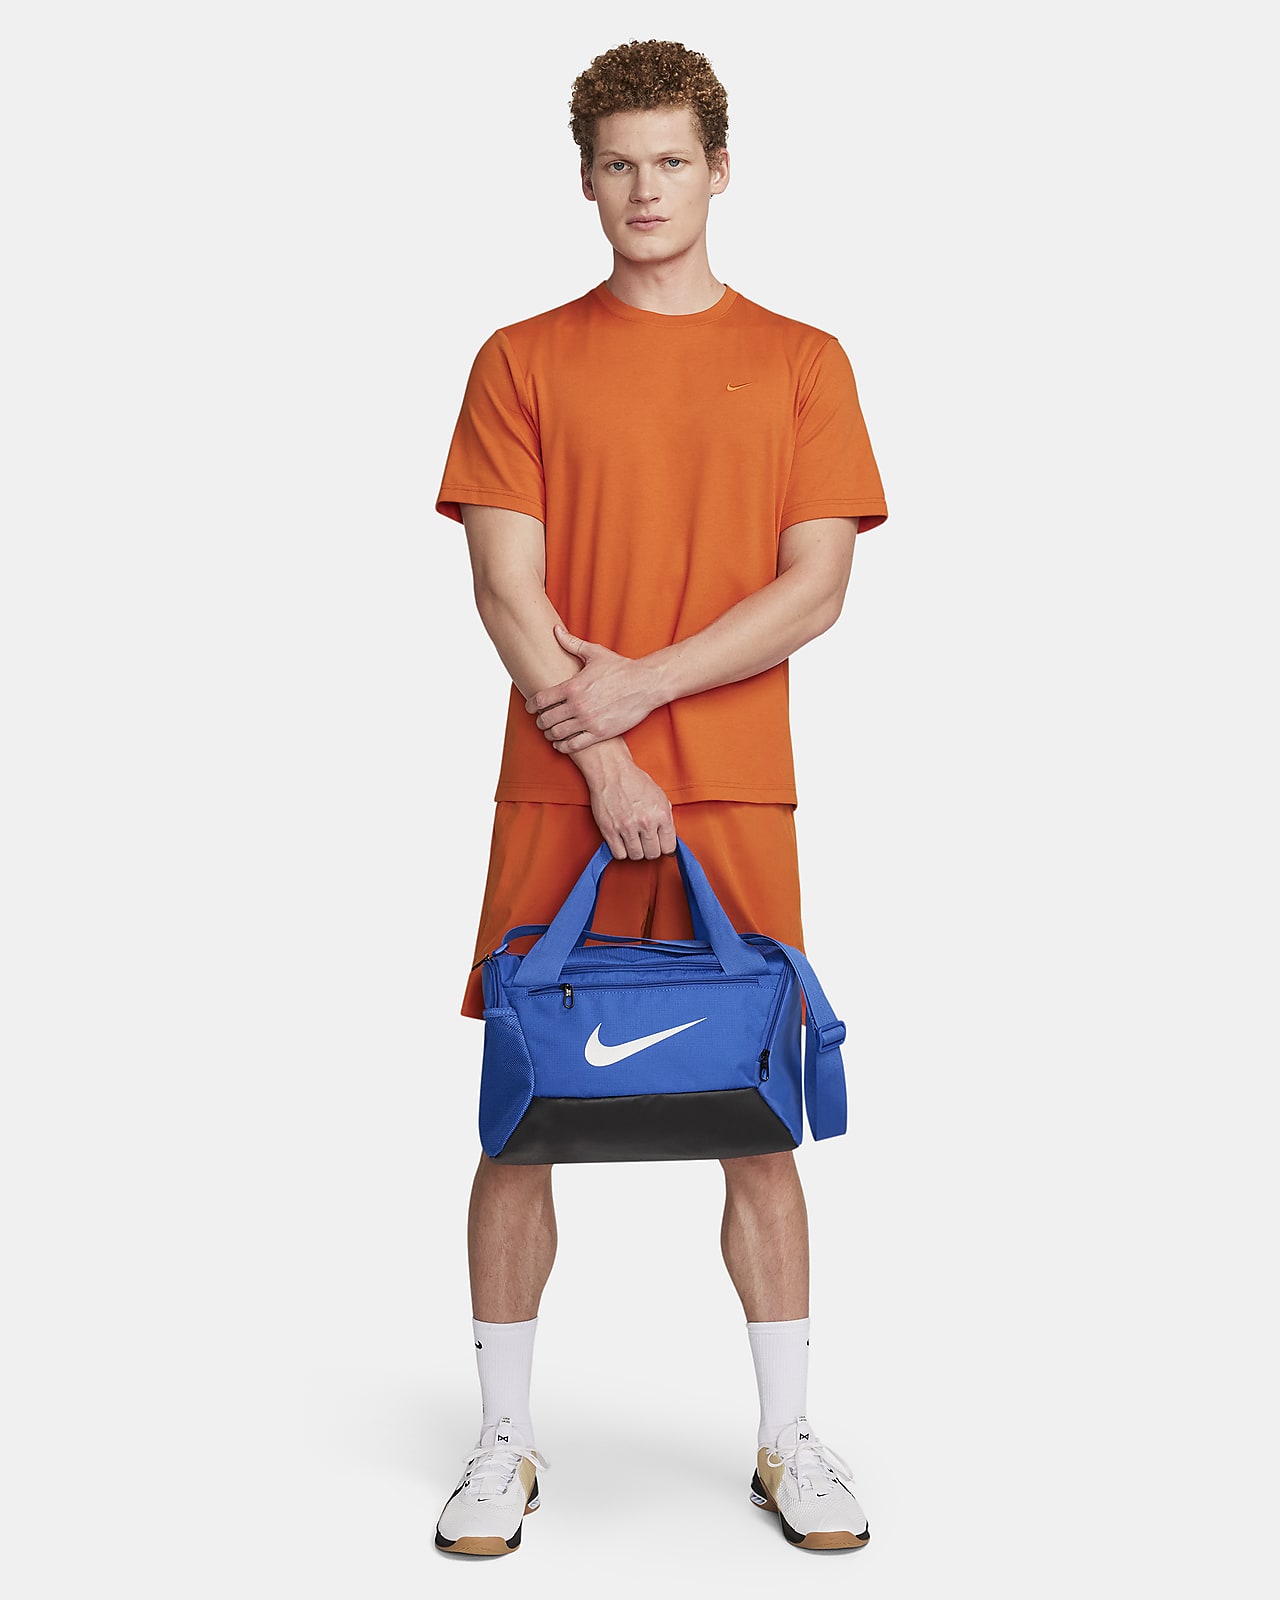 Nike Brasilia 9.5 Training Duffel Bag (Extra-Small, 25L). Nike CH